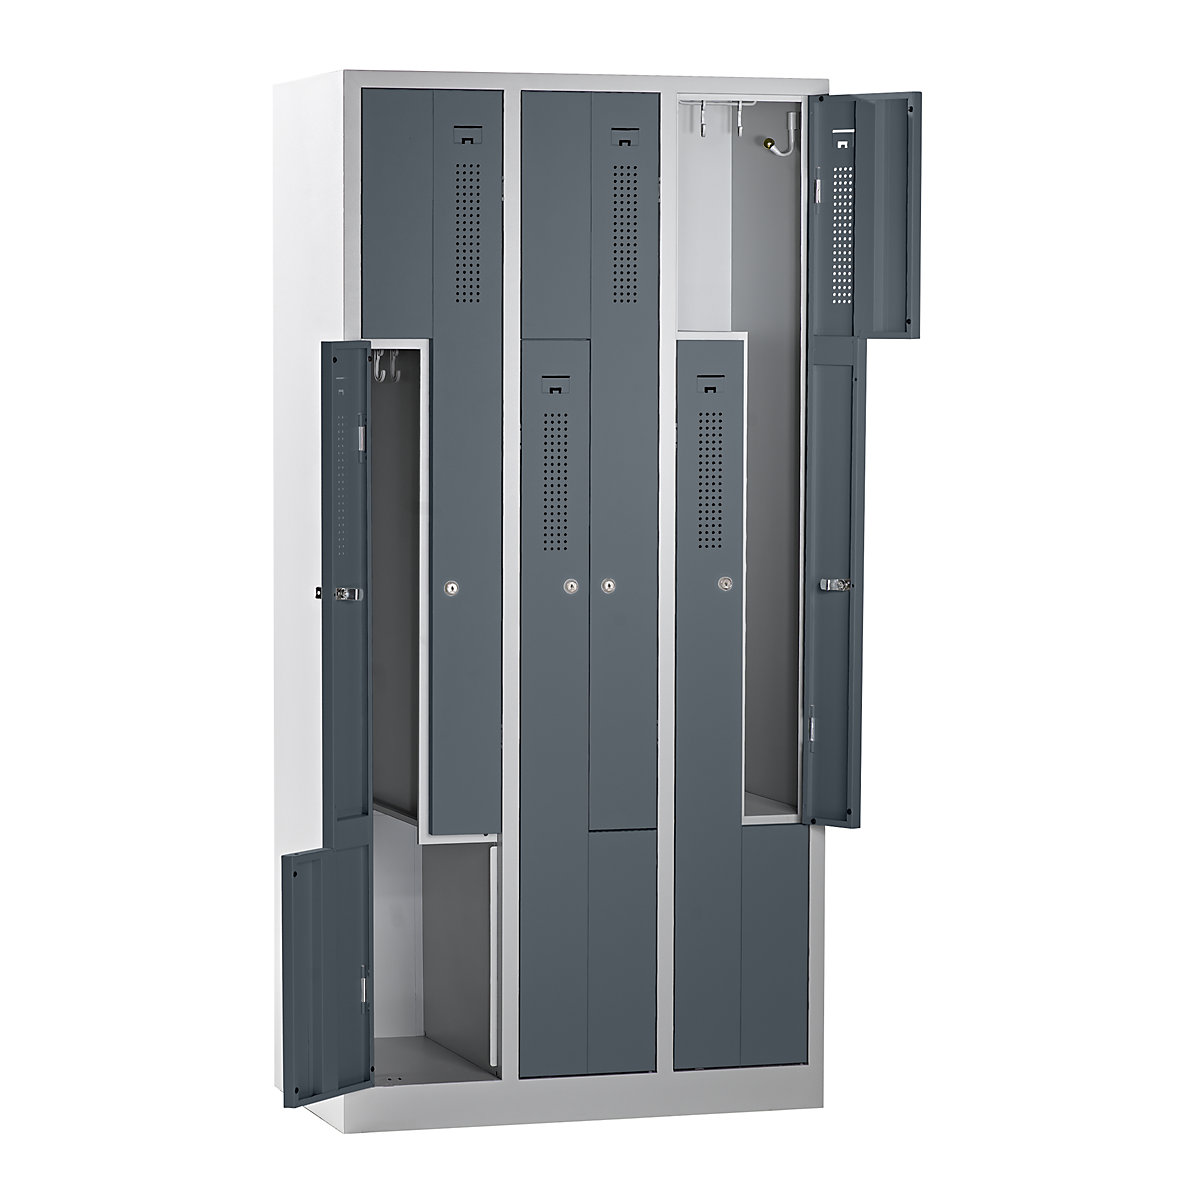 AMSTERDAM Z cloakroom locker – eurokraft basic, width 870 mm, 3 compartments, 6 doors, door colour basalt grey, body in light grey-11